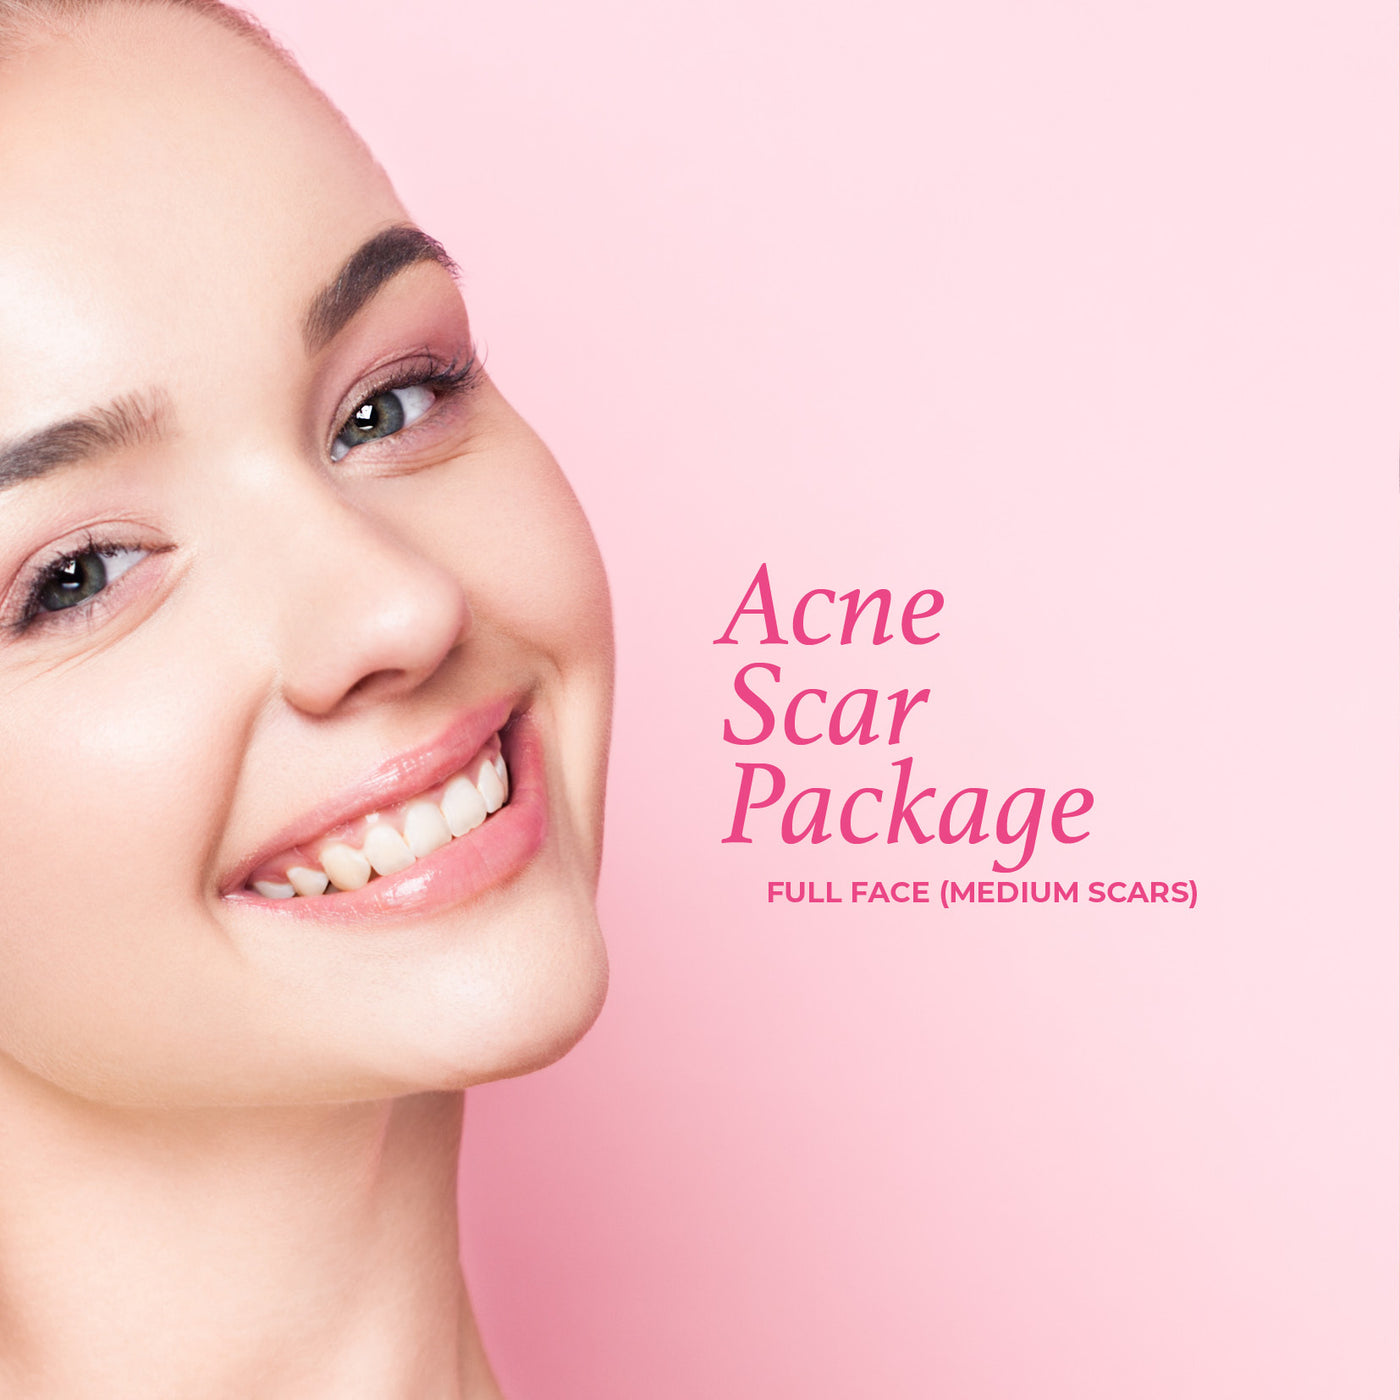 Acne Scar Package - Full Face (medium scars)